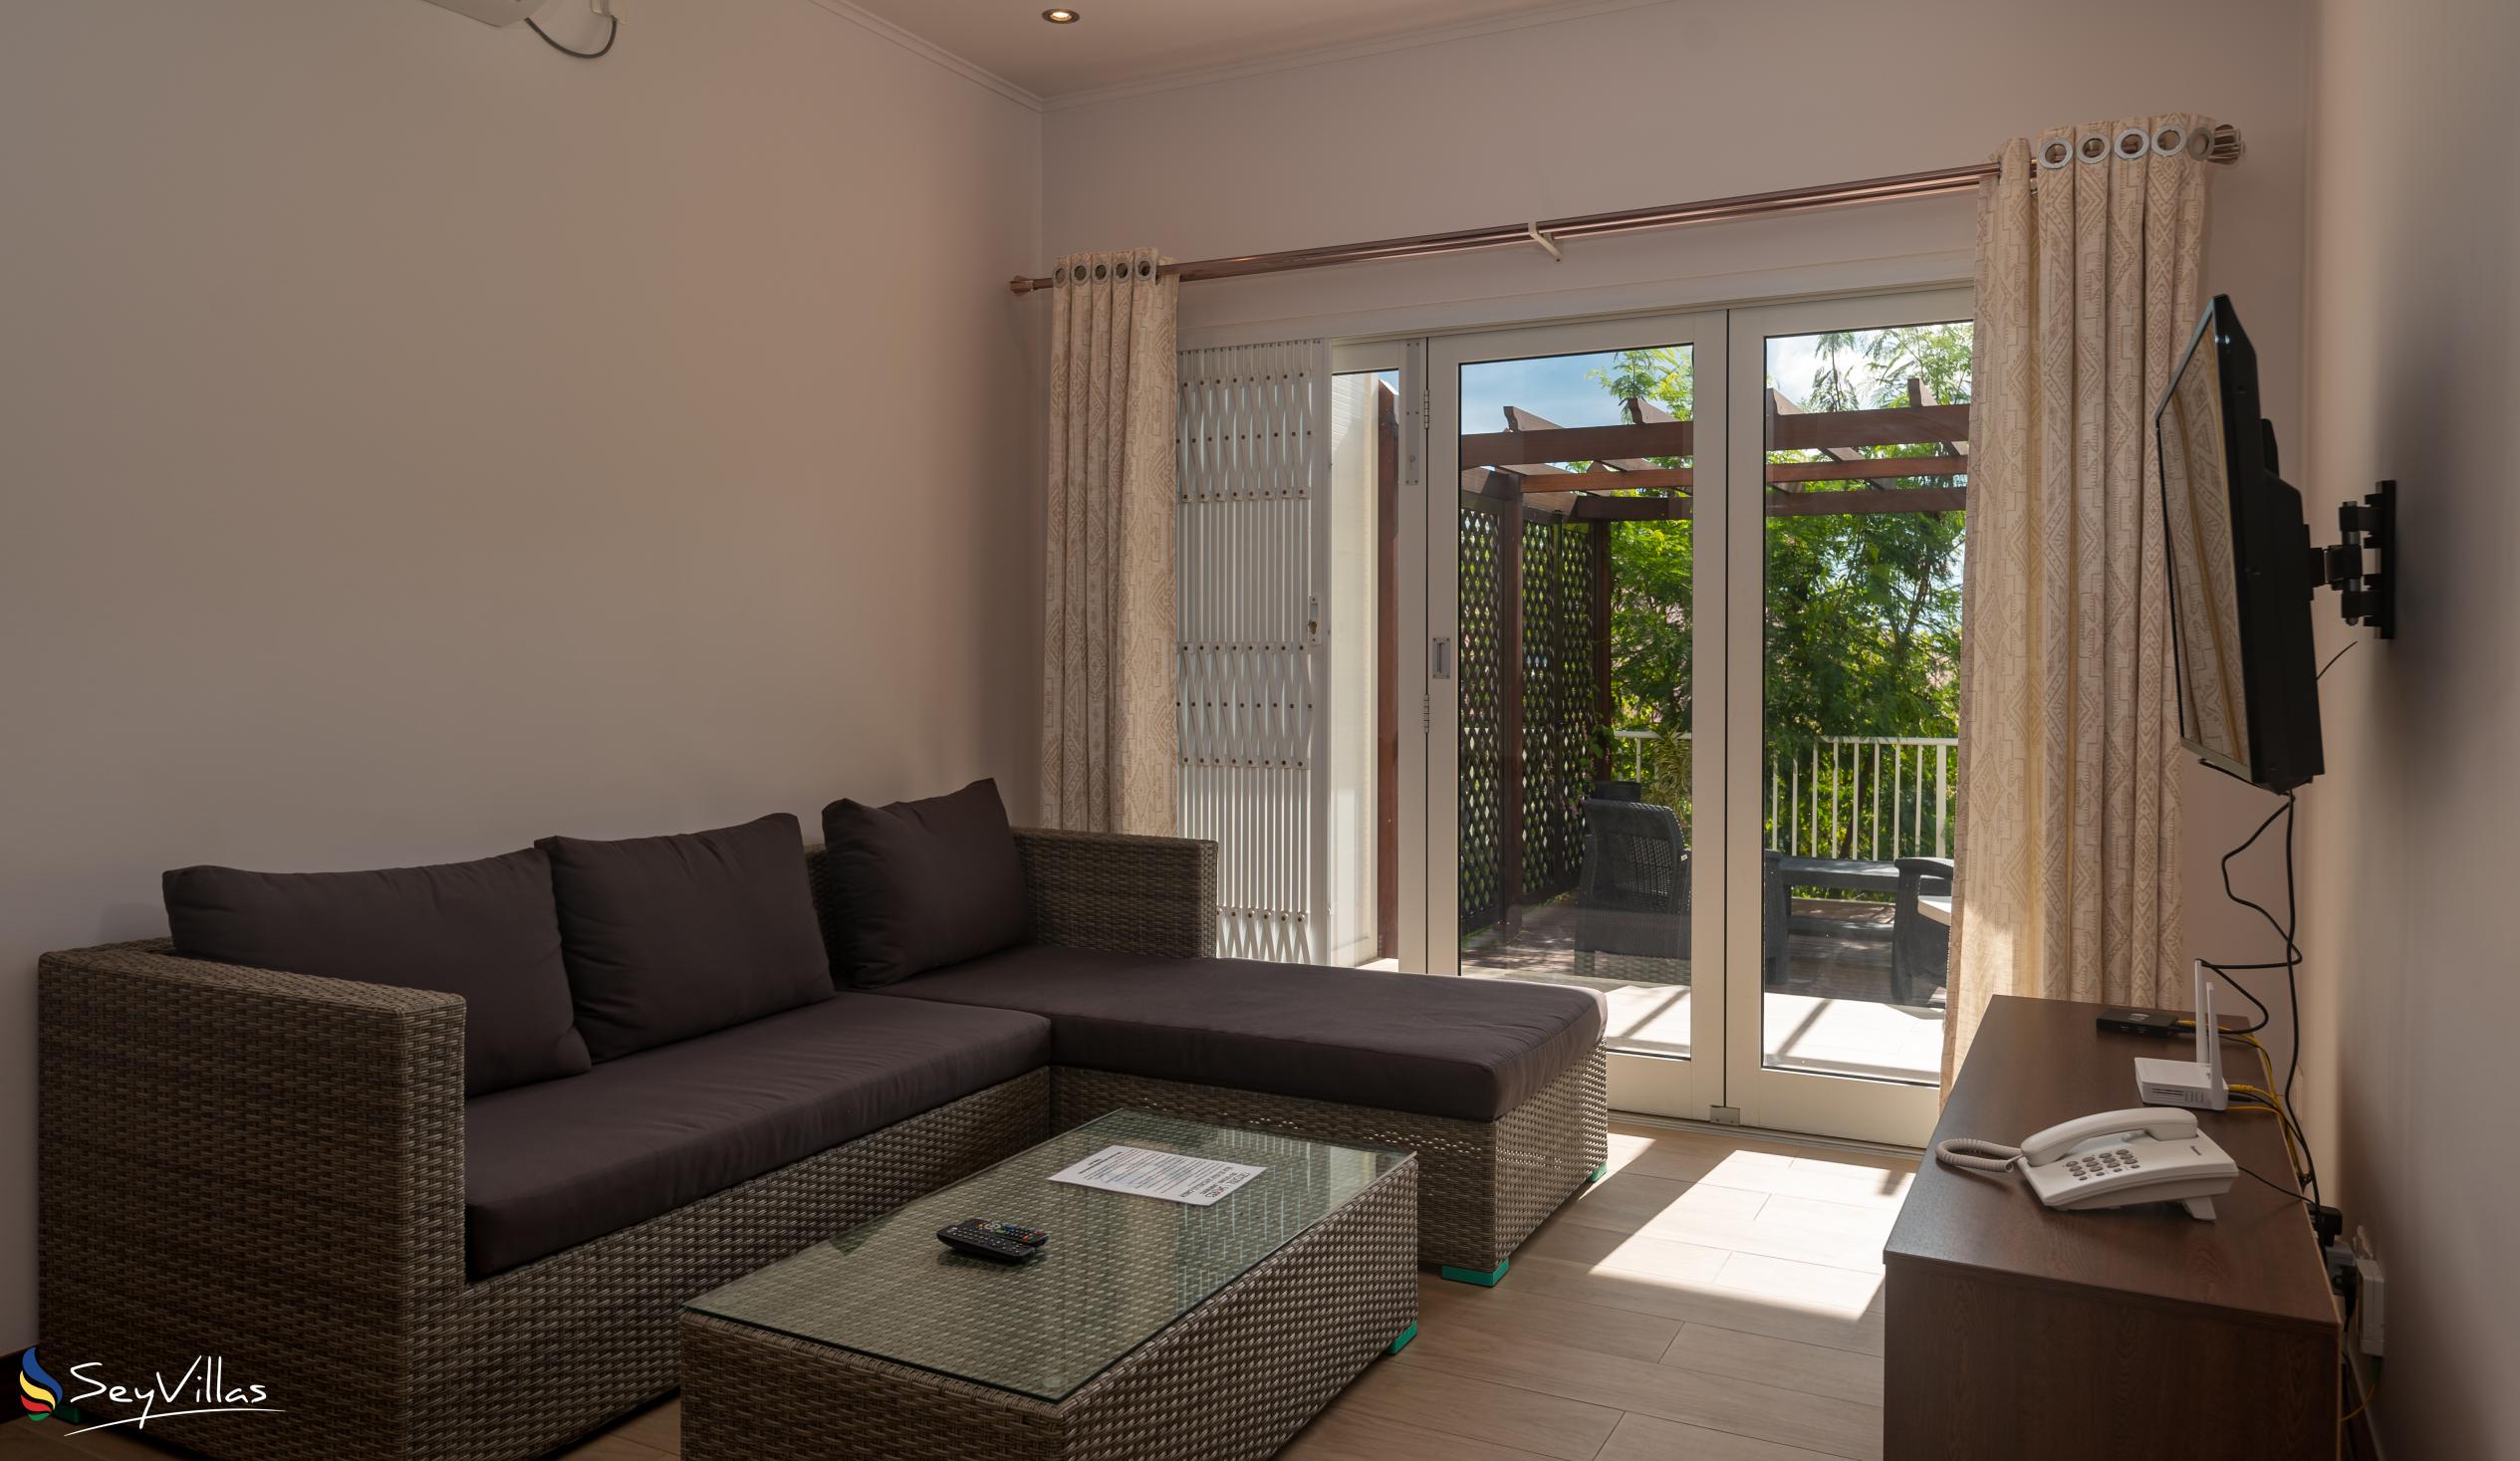 Foto 60: Crystal Shores Self Catering Apartments - Appartamento vista sul giardino - Mahé (Seychelles)